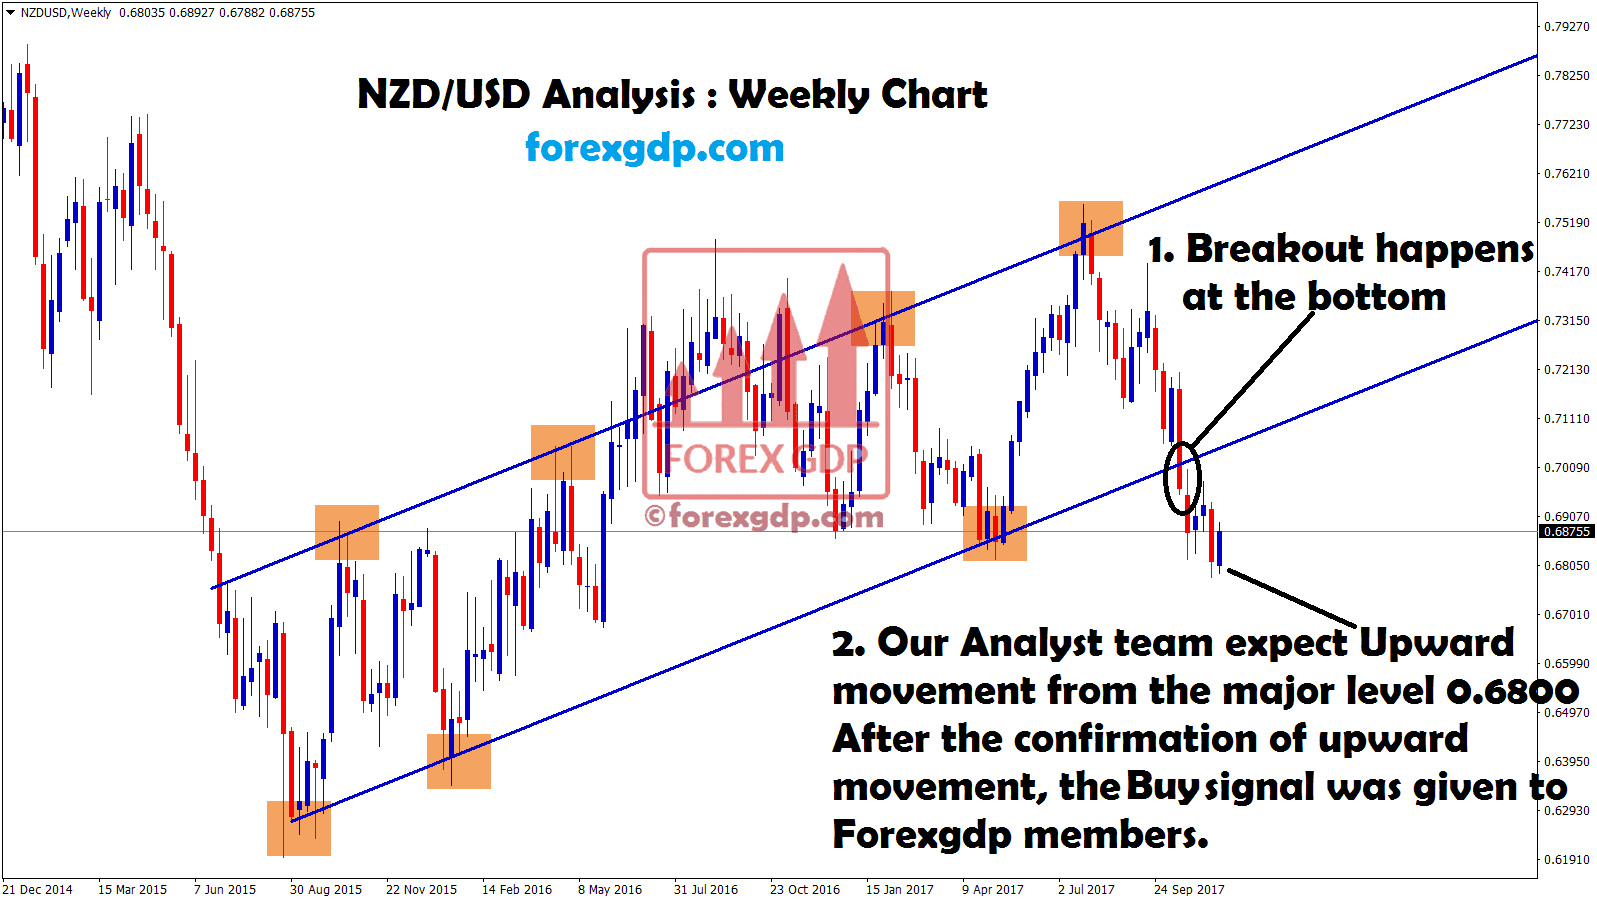 NZDUSD trendline breakout at the weekly chart